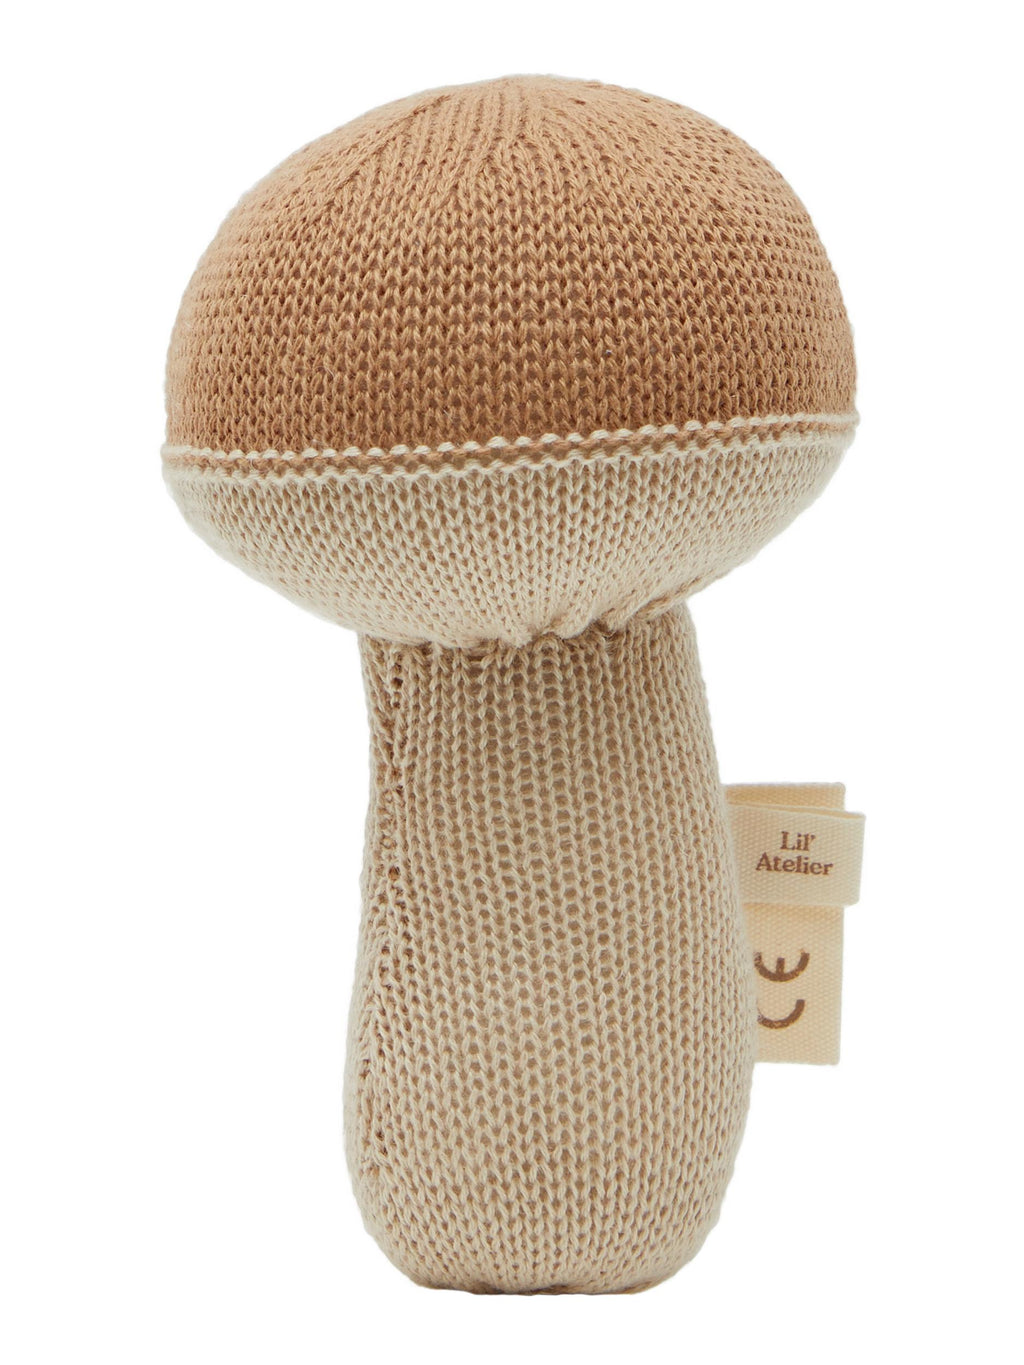 Lil Atelier Lumin Knit Mushroom